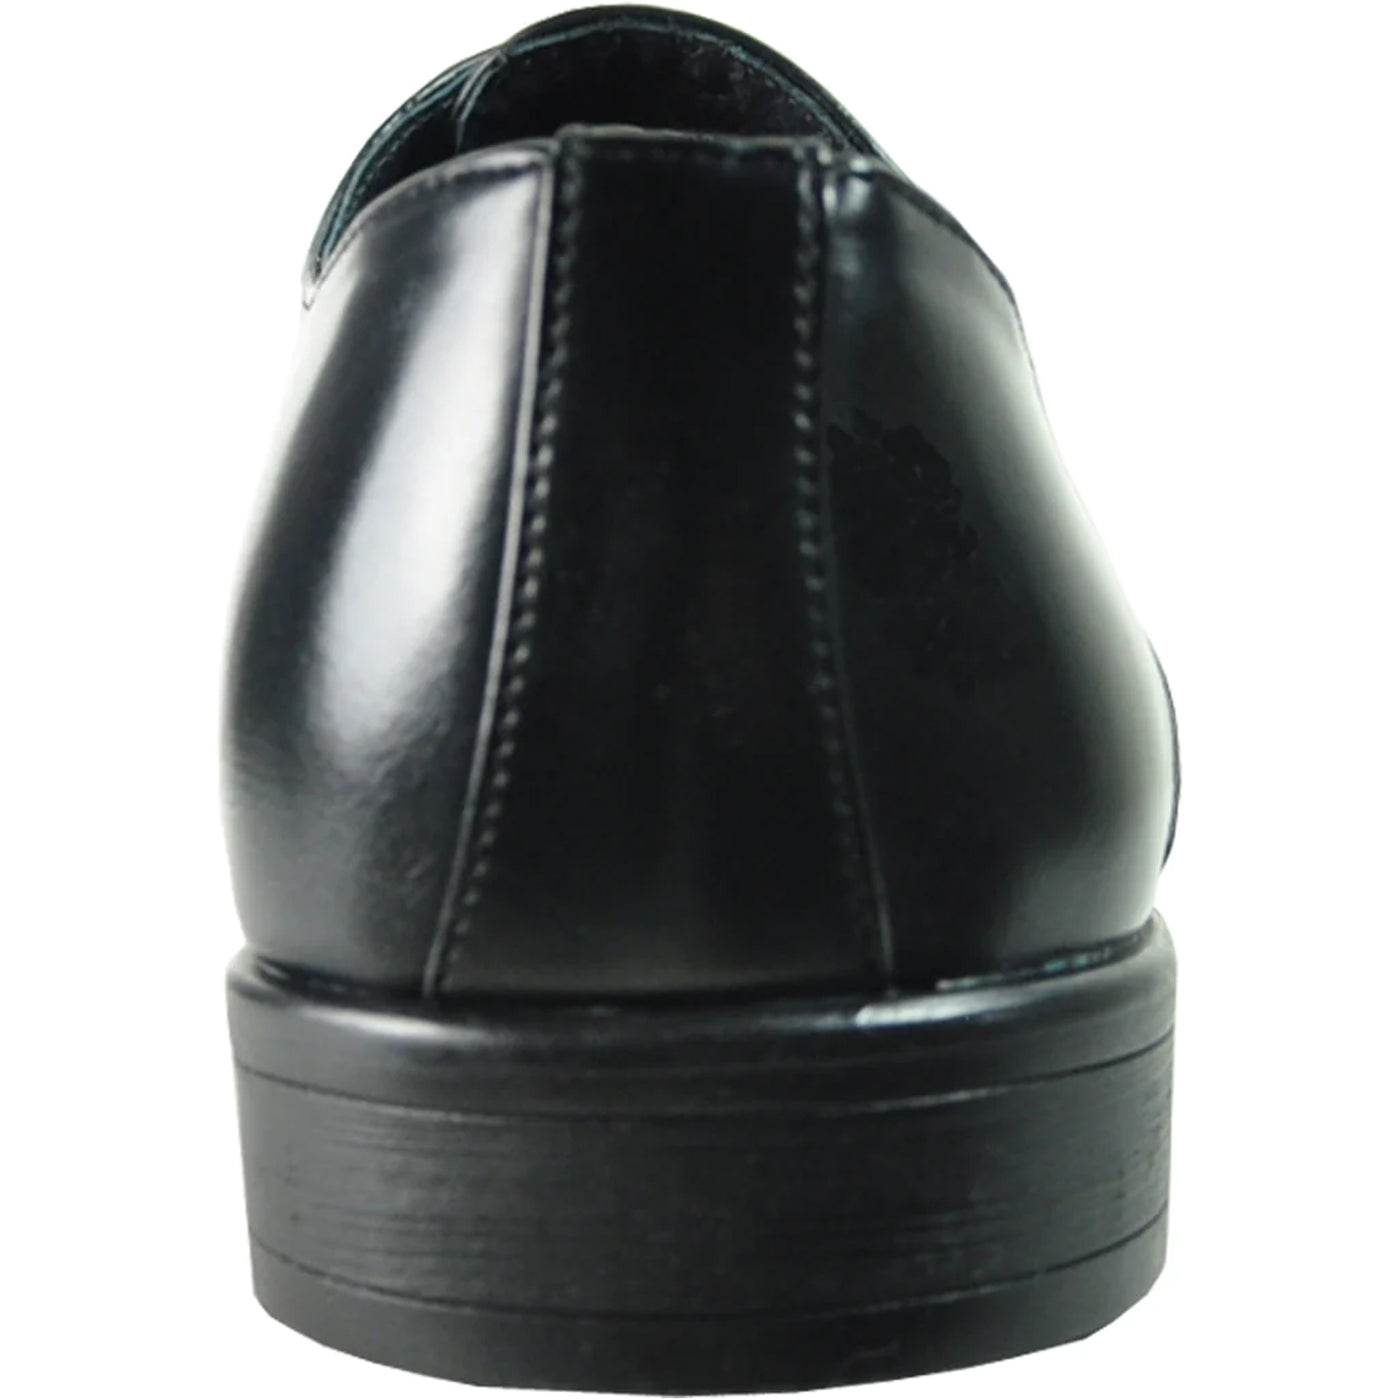 Mens Pointed Plain Toe Oxford Dress Shoe in Black